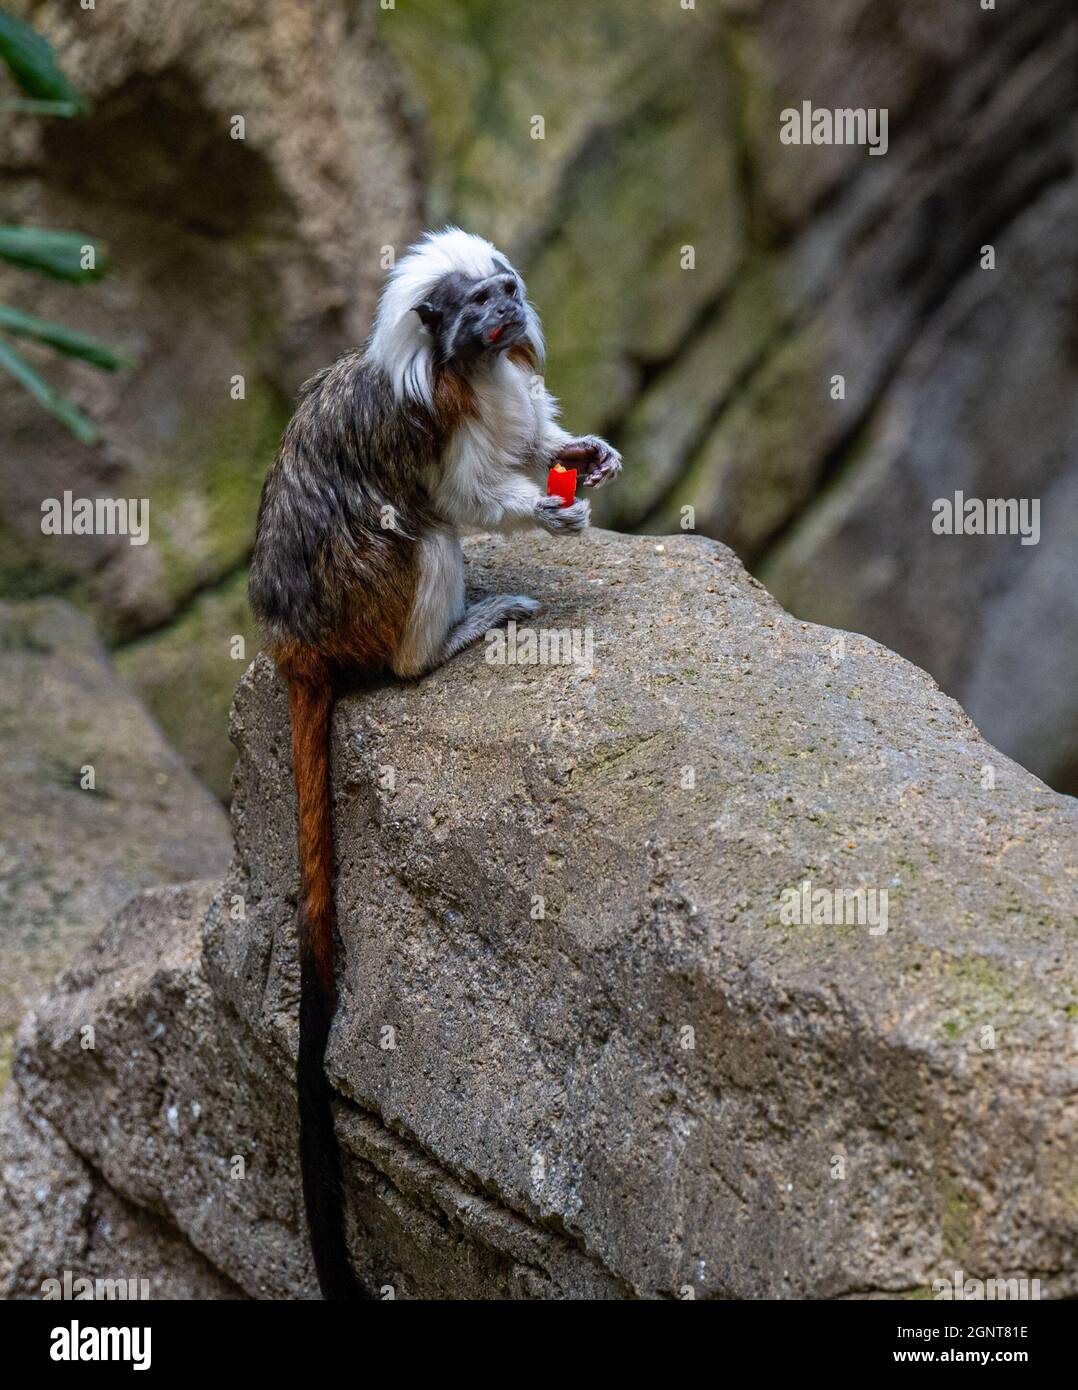 Cotone Top Tamarin, saguinus oedipus, seduto su una roccia Foto Stock